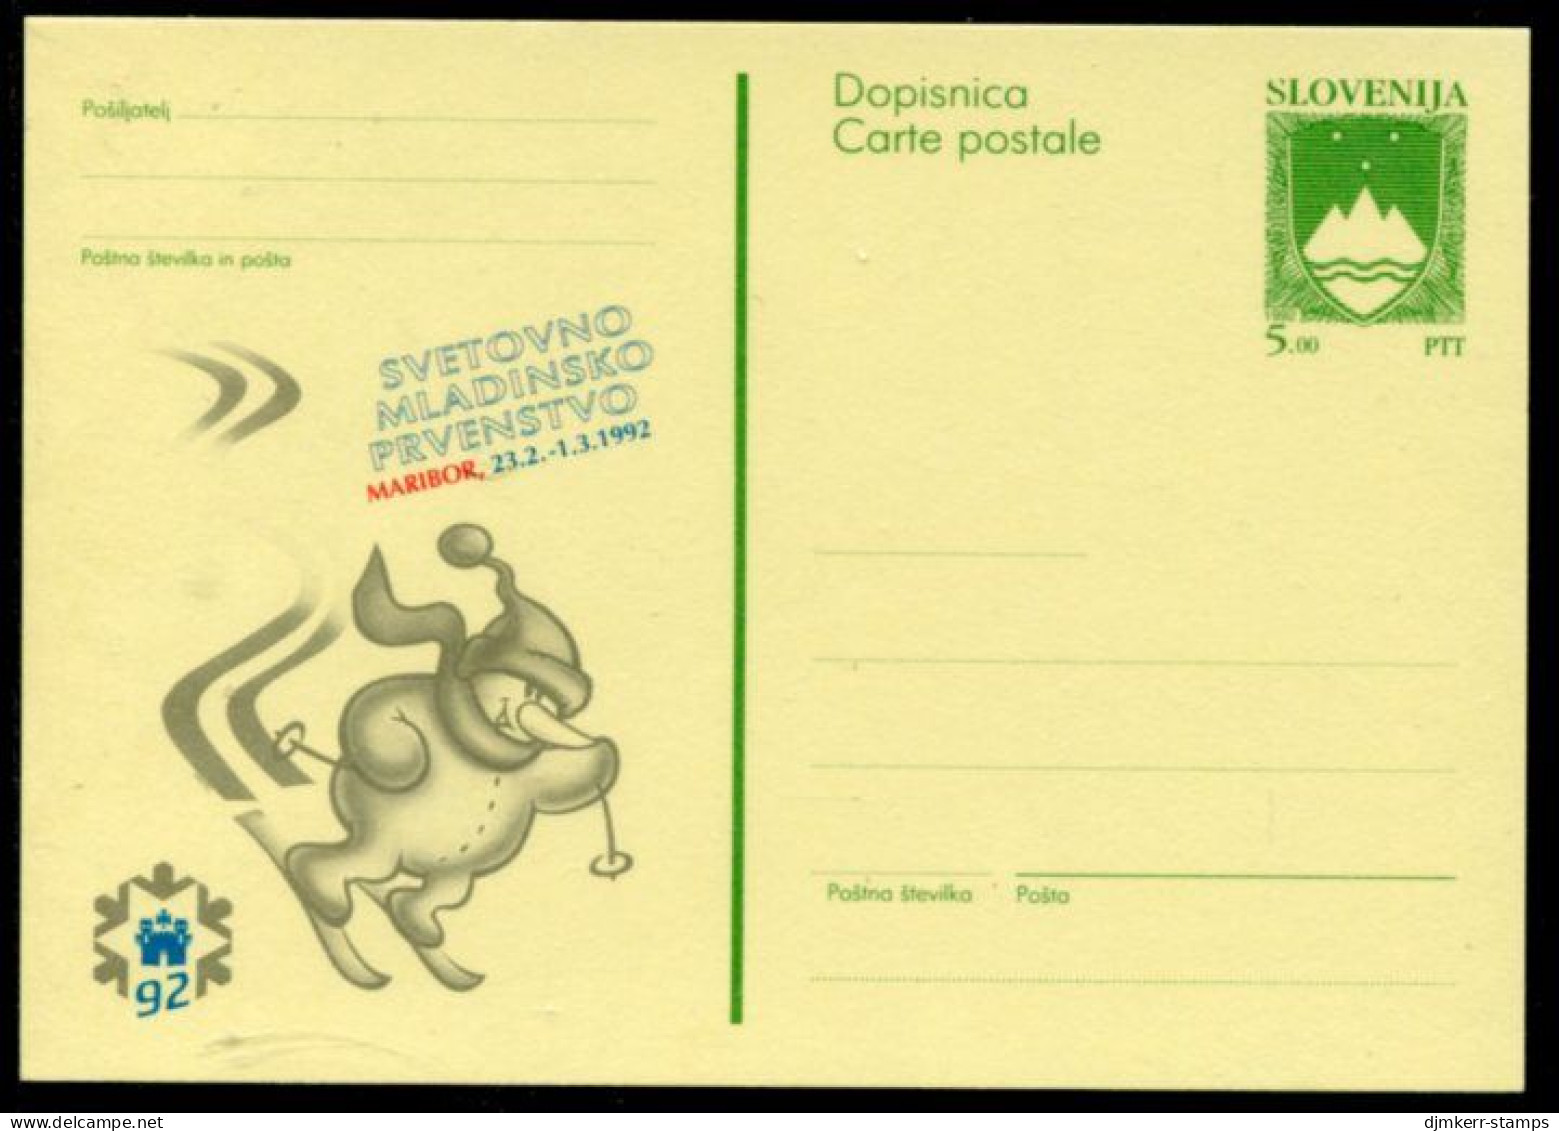 SLOVENIA 1992 5.00 T.  Junior Ski  World Championships Stationery Card, Unused.   Michel P2 - Slovenië